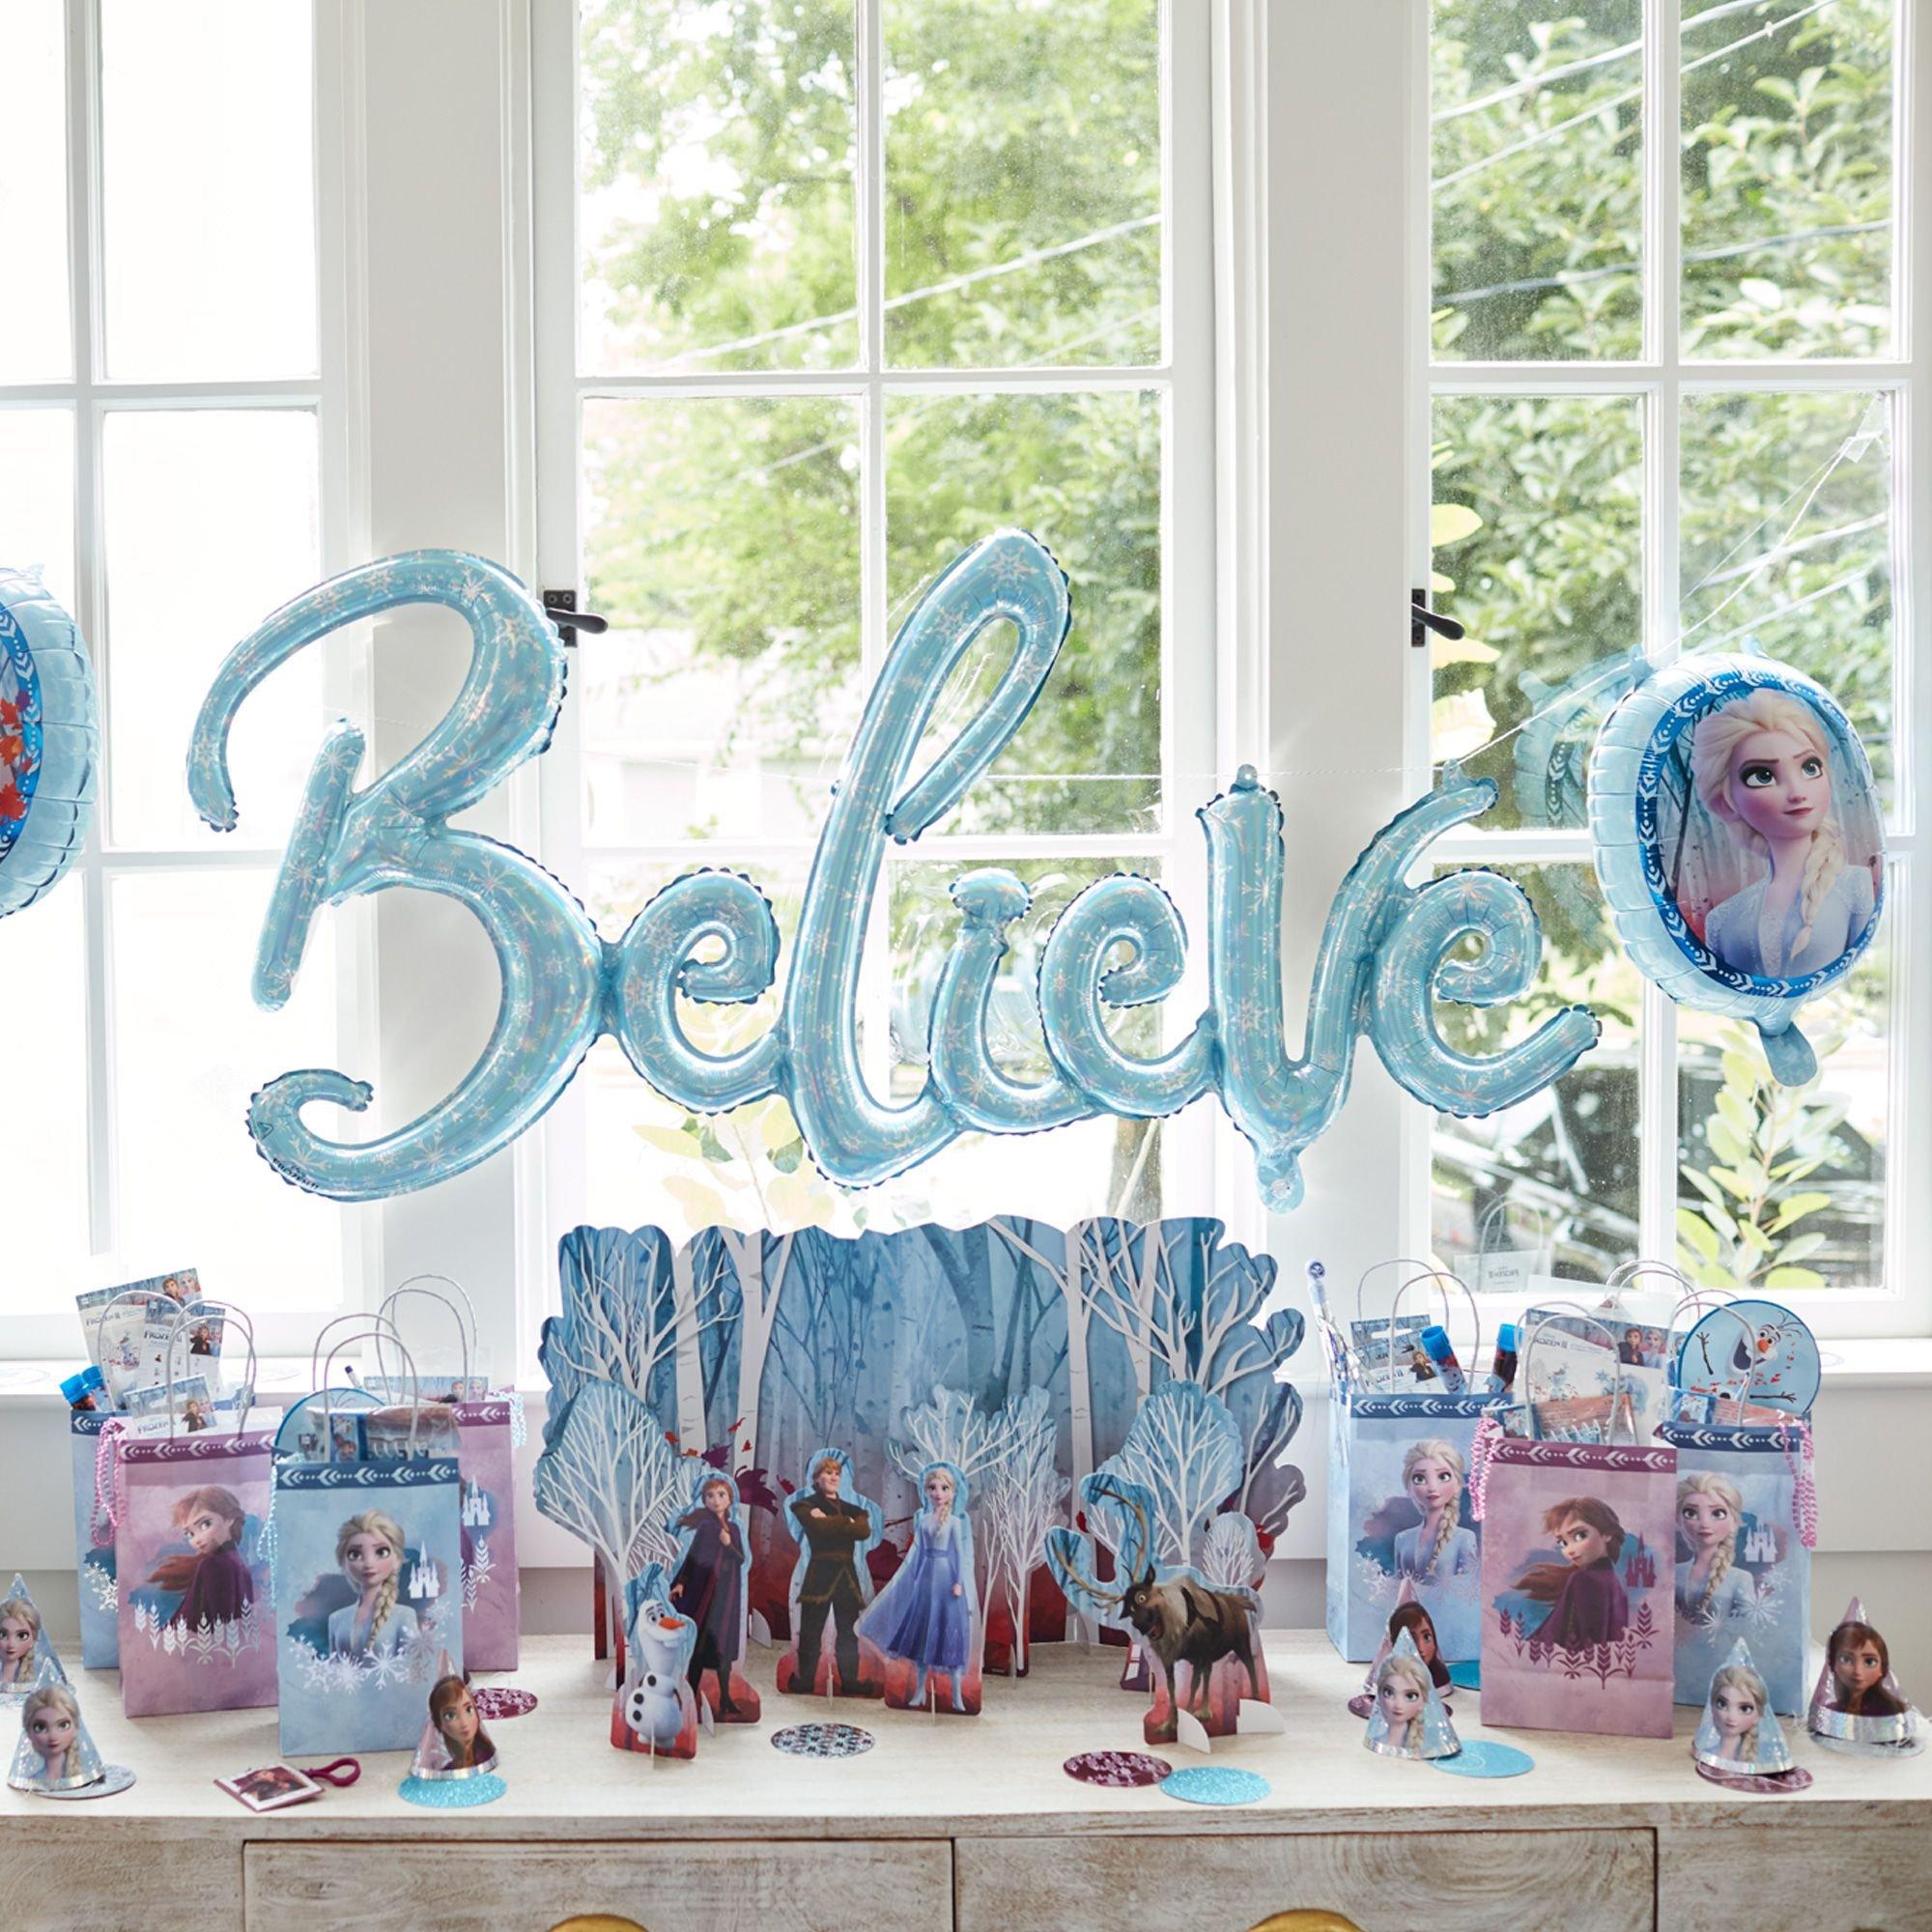 Disney Frozen Party Decoration Ideas - Two Sisters